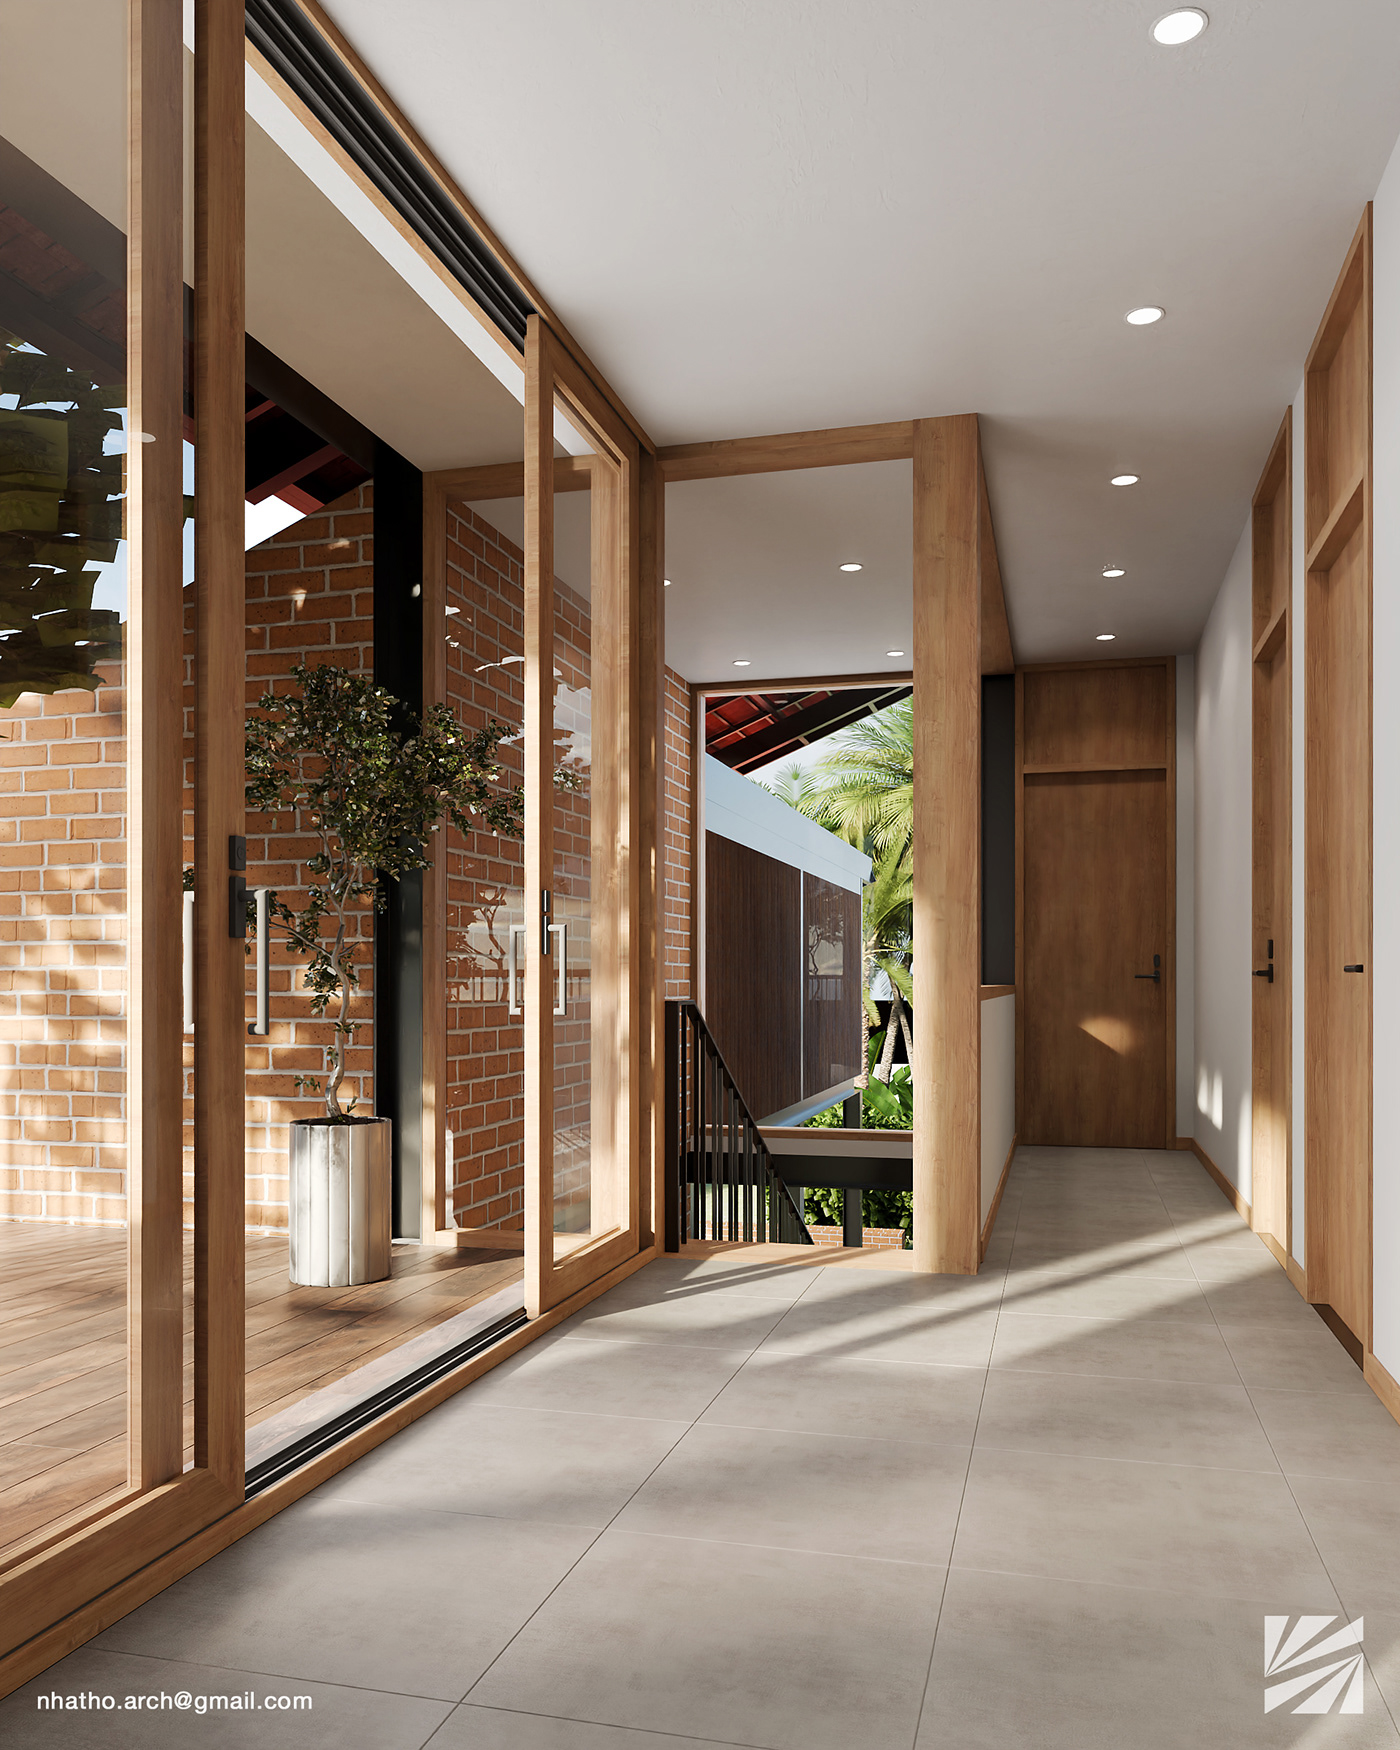 architecture interior design  visualization archviz 3ds max vray corona Render 3D modern